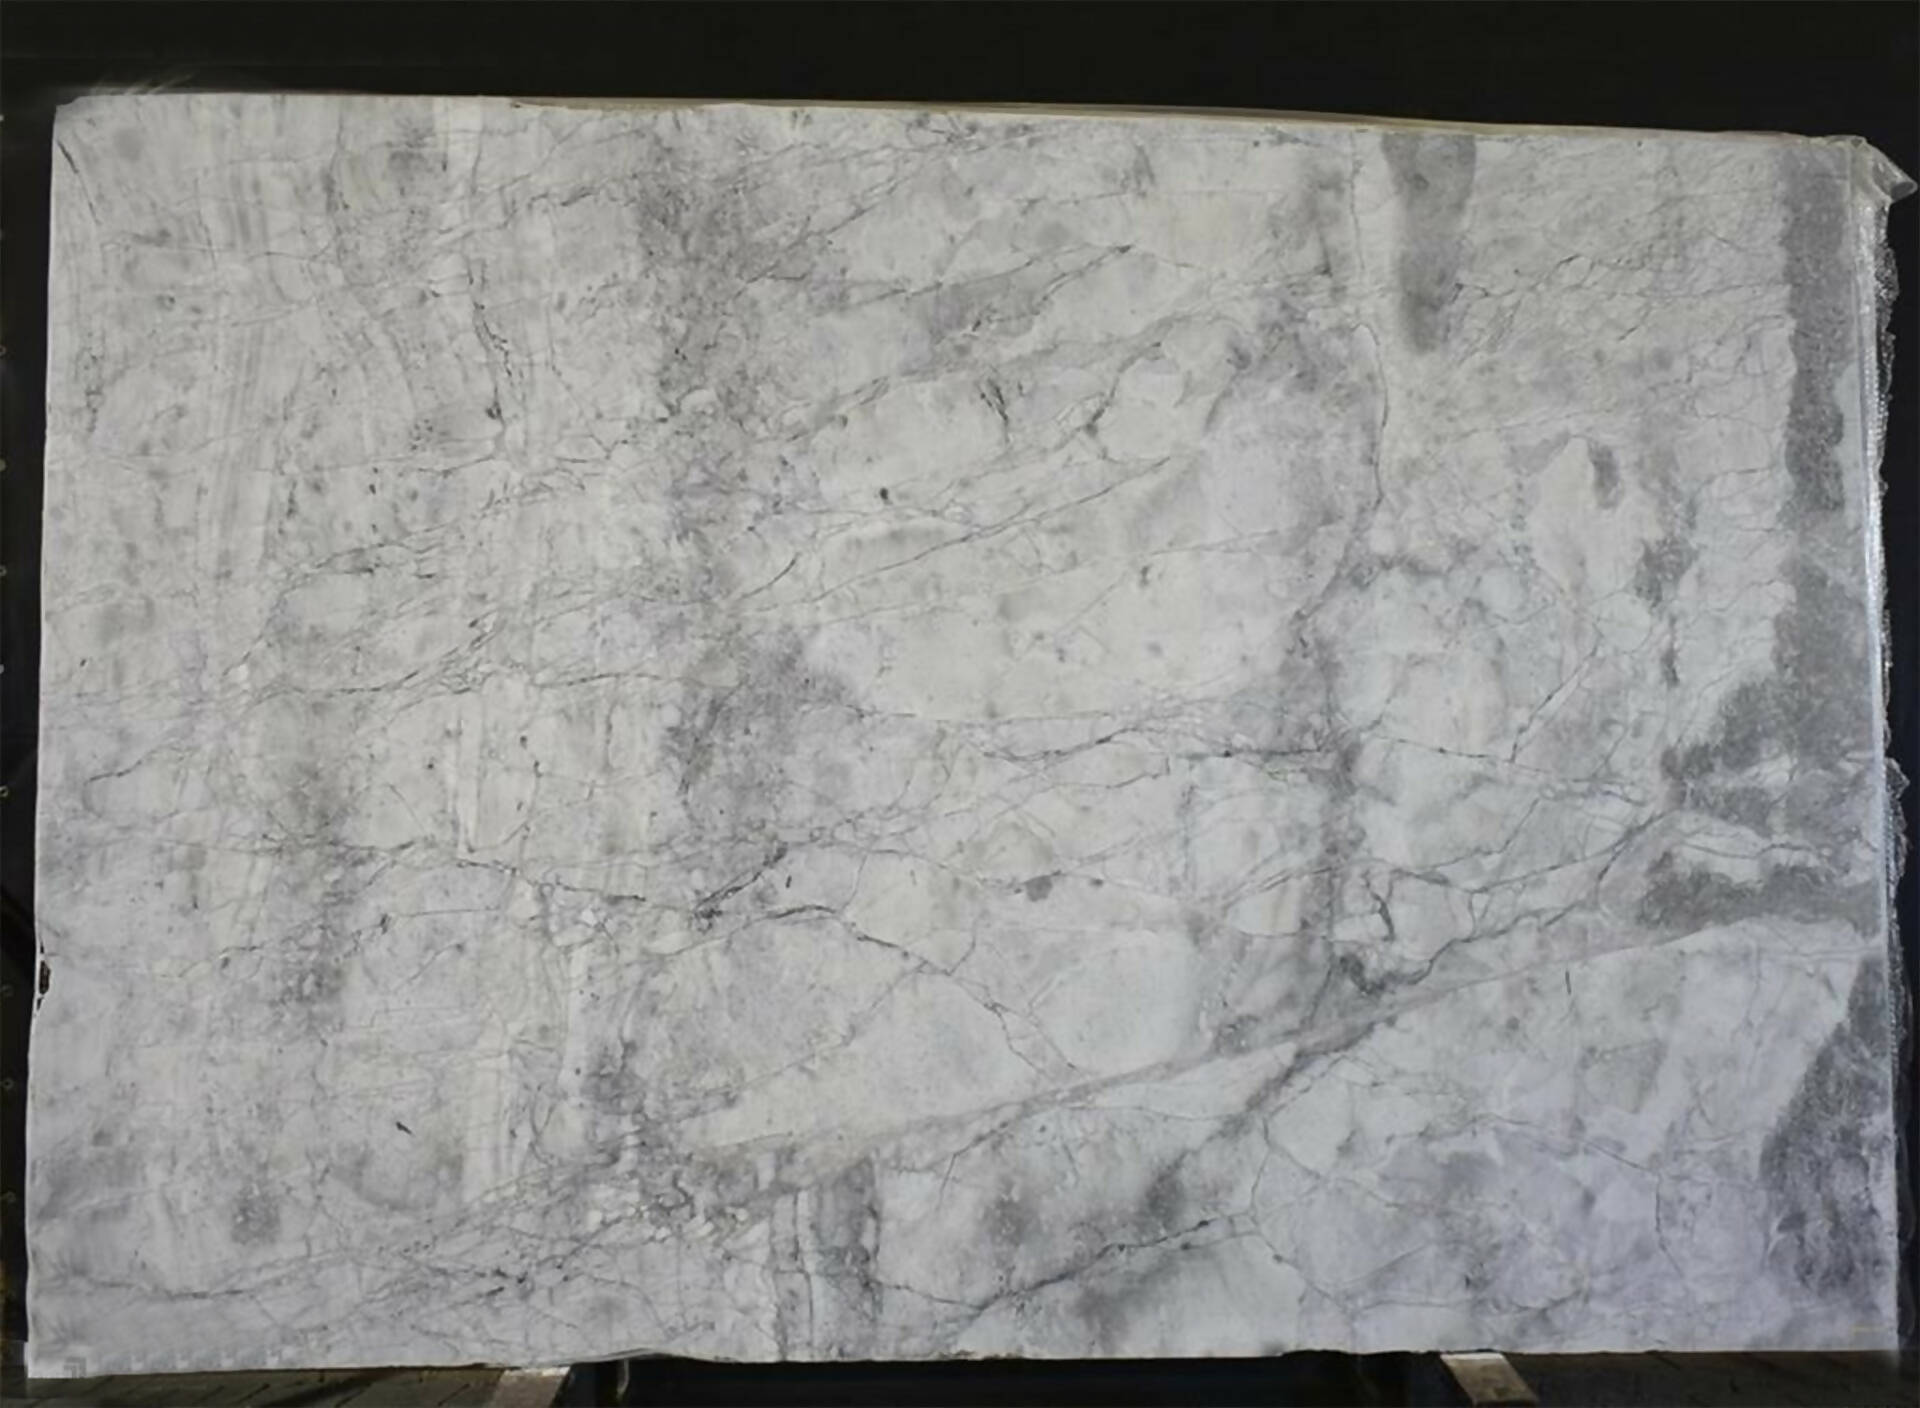 BIANCO ECLIPSE QUARTZITE,Quartzite,Granite Slabs UK,www.work-tops.com